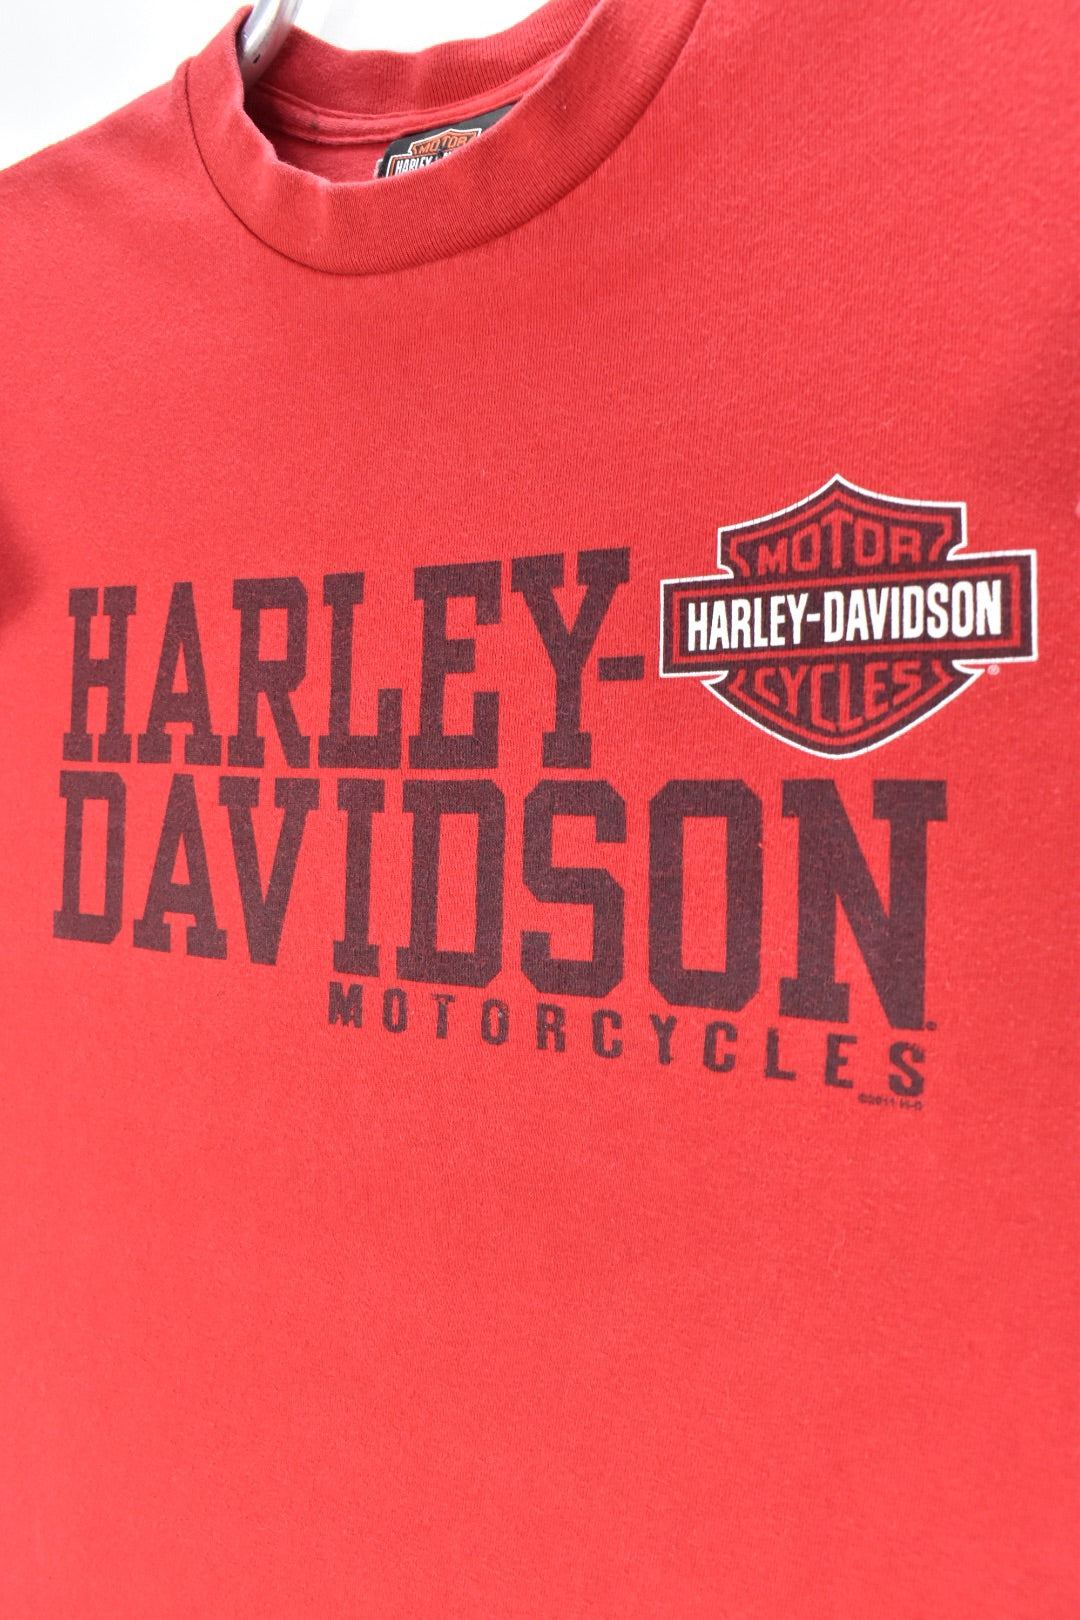 VINTAGE HARLEY DAVIDSON RED T-SHIRT | SMALL HARLEY DAVIDSON